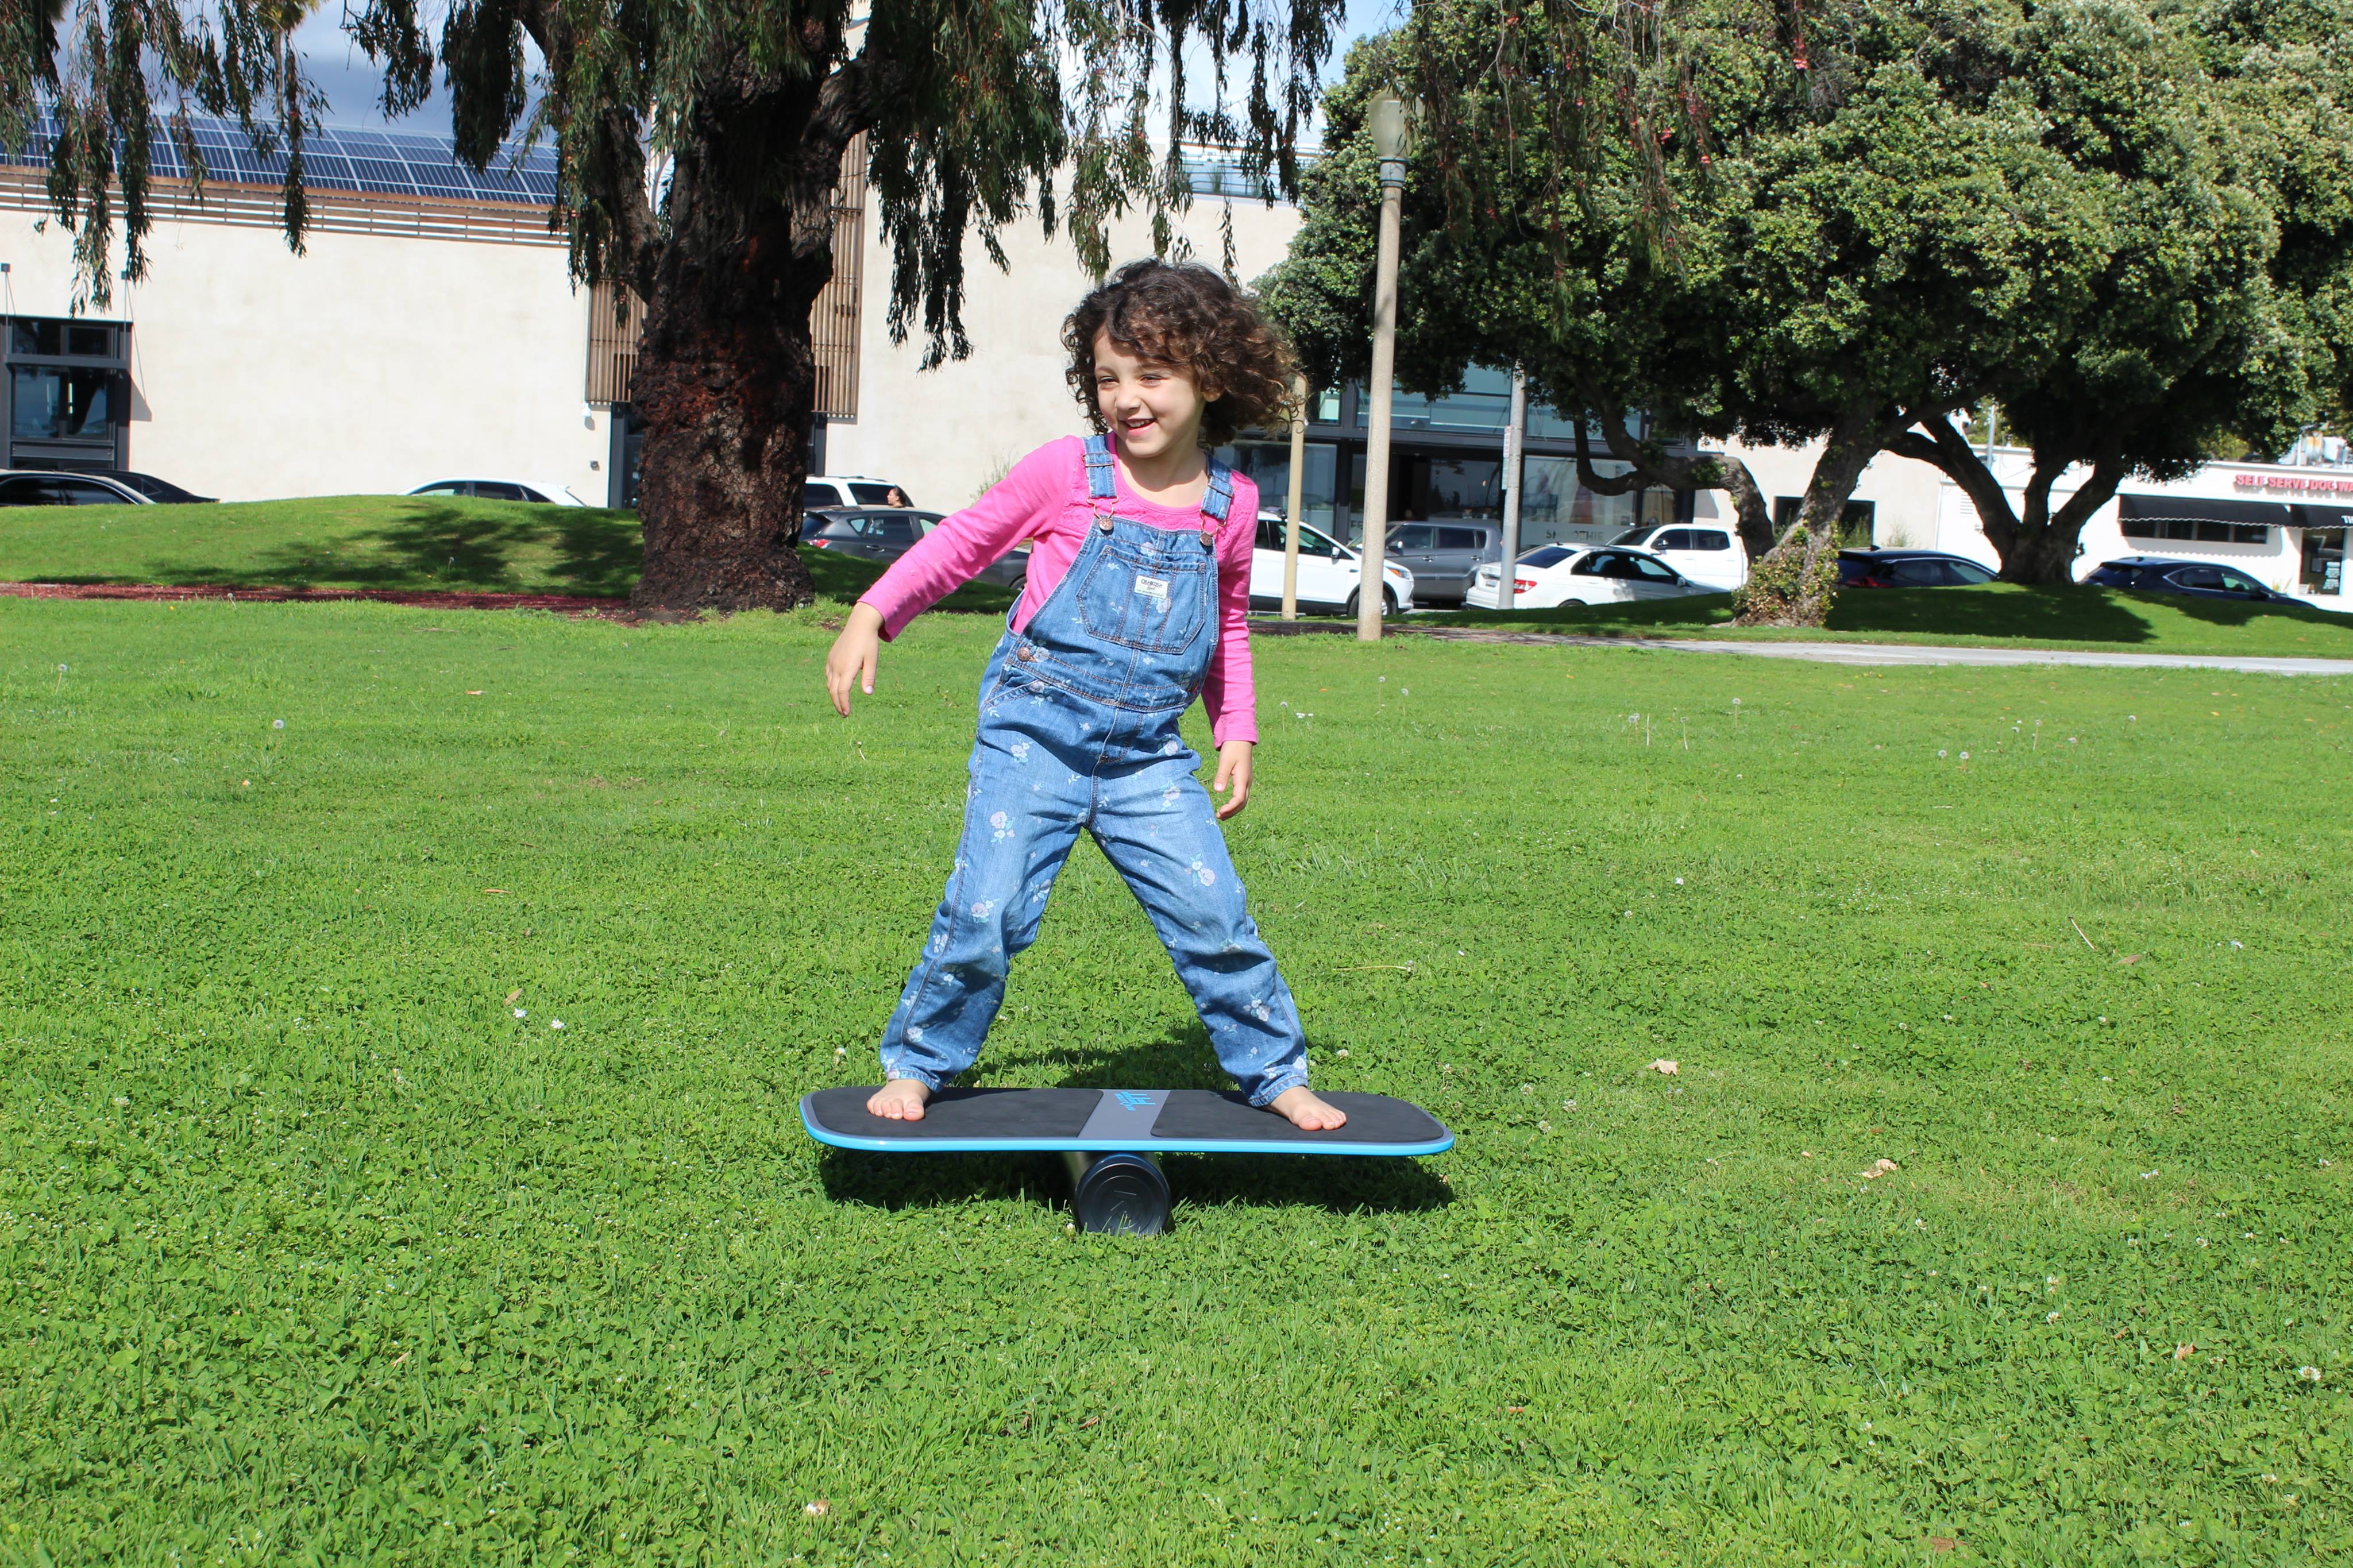 Katie, age 4, balancing on a Revolution Balance Board